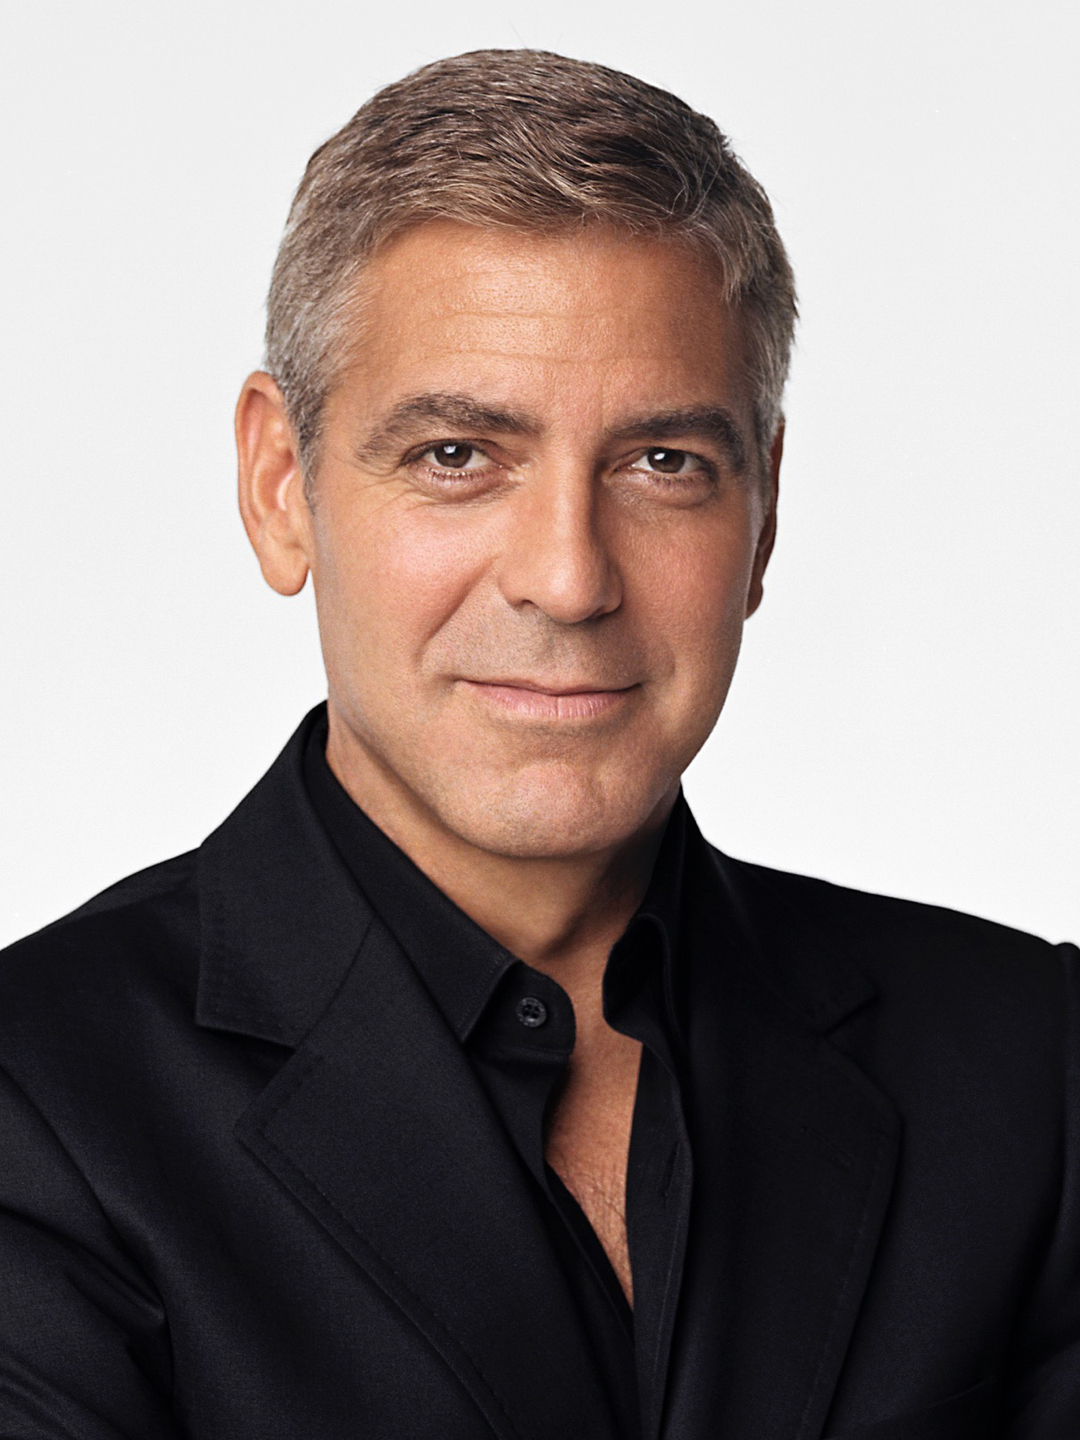 George Clooney current look